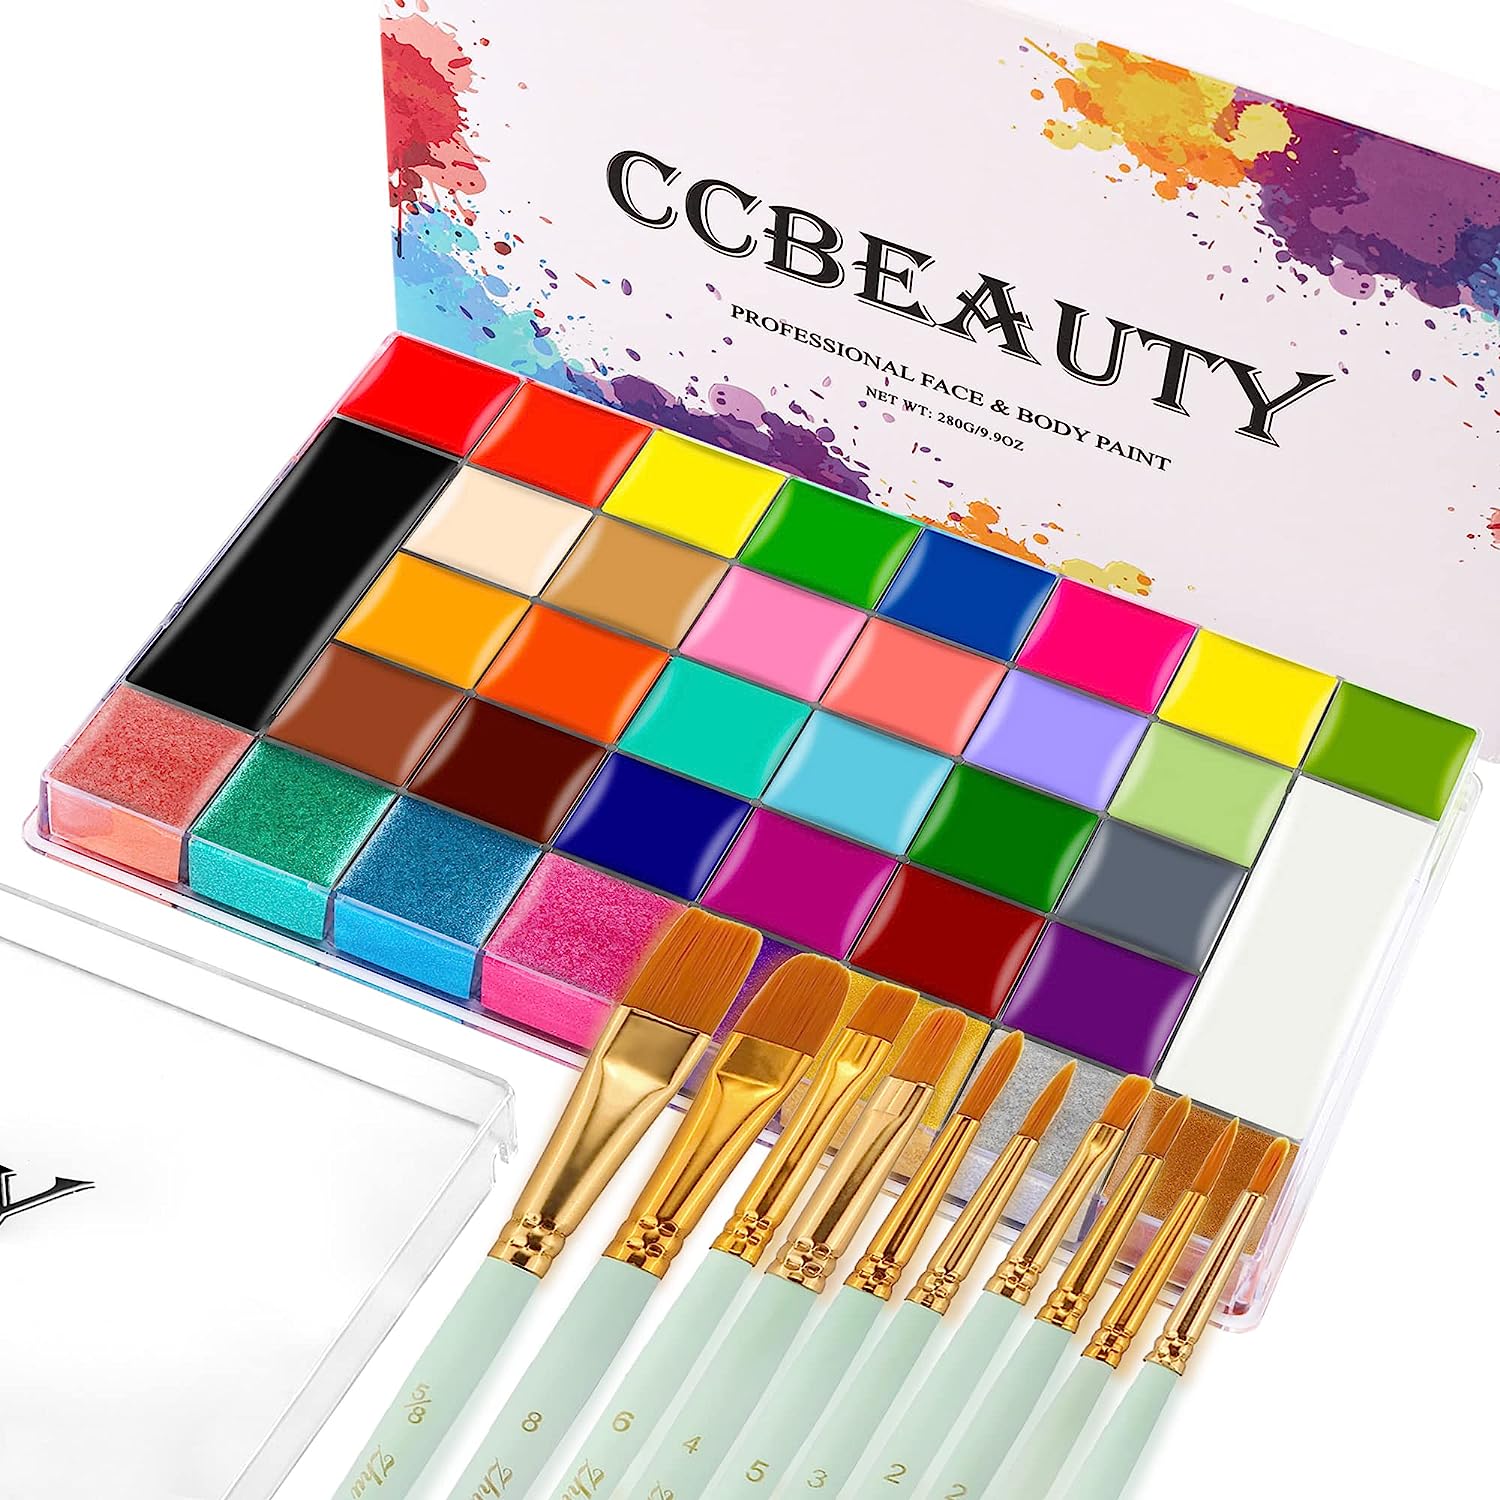 CCbeauty 36 Colors Face Body Paint,Professional Large [...]